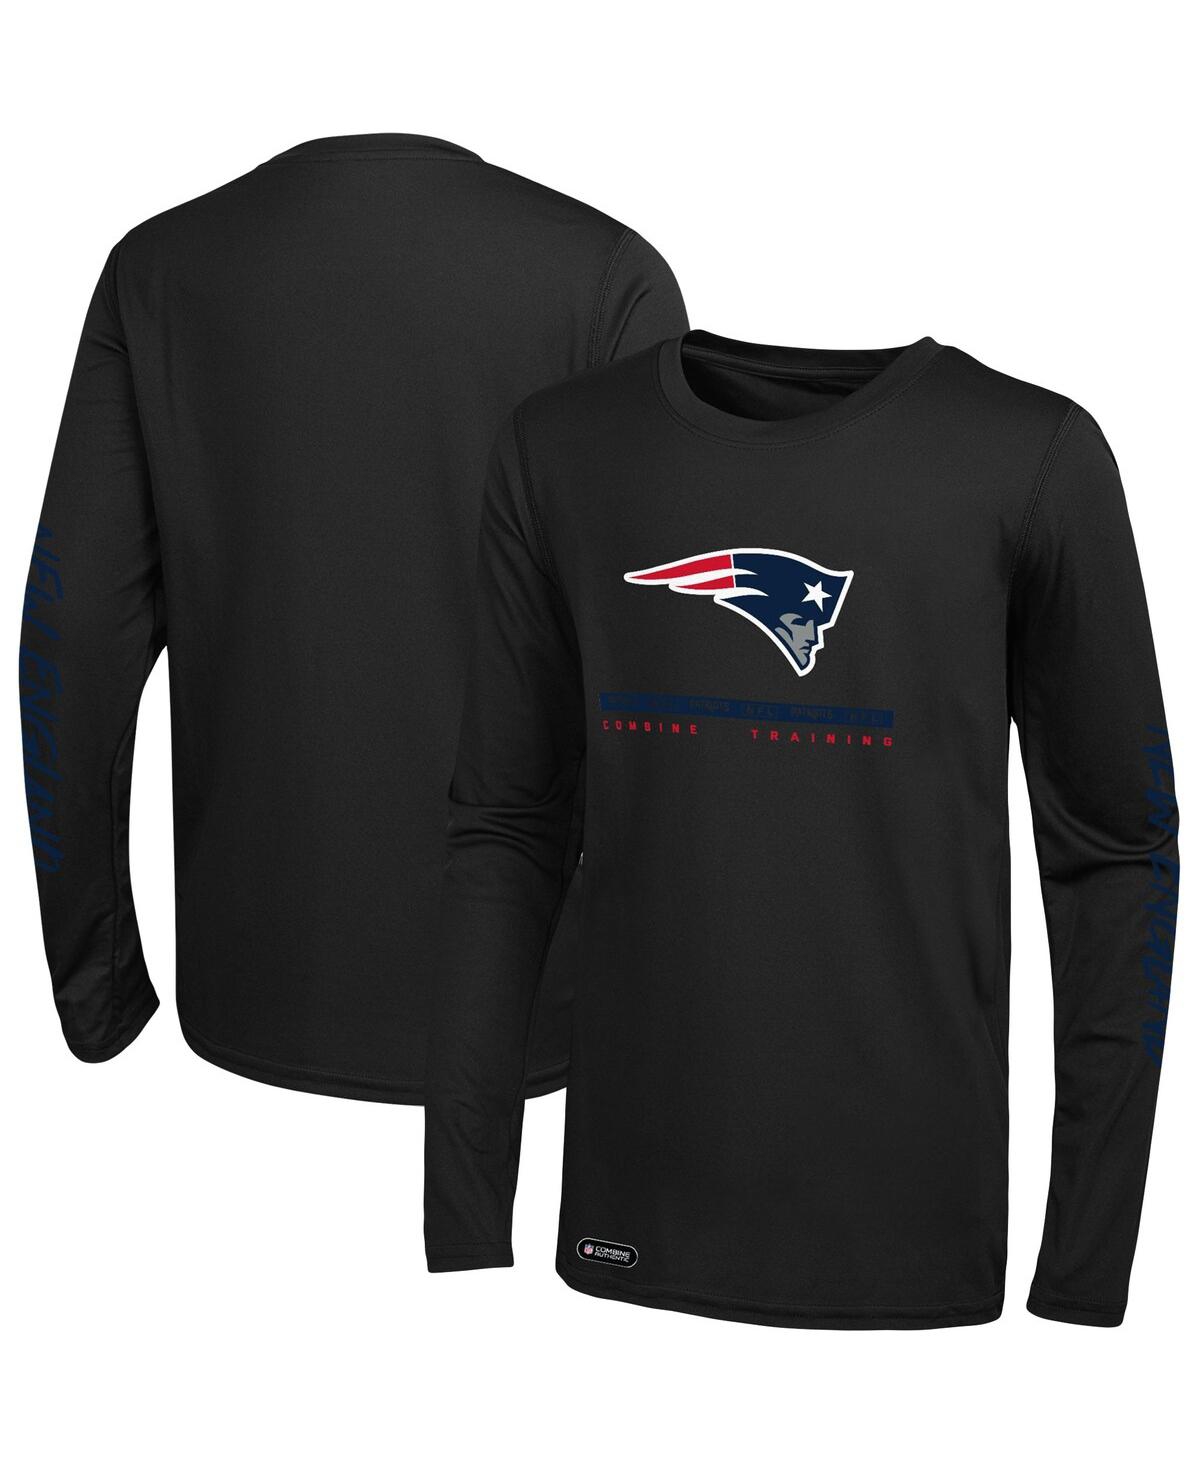 Outerstuff Men's Black New England Patriots Agility Long Sleeve T-shirt